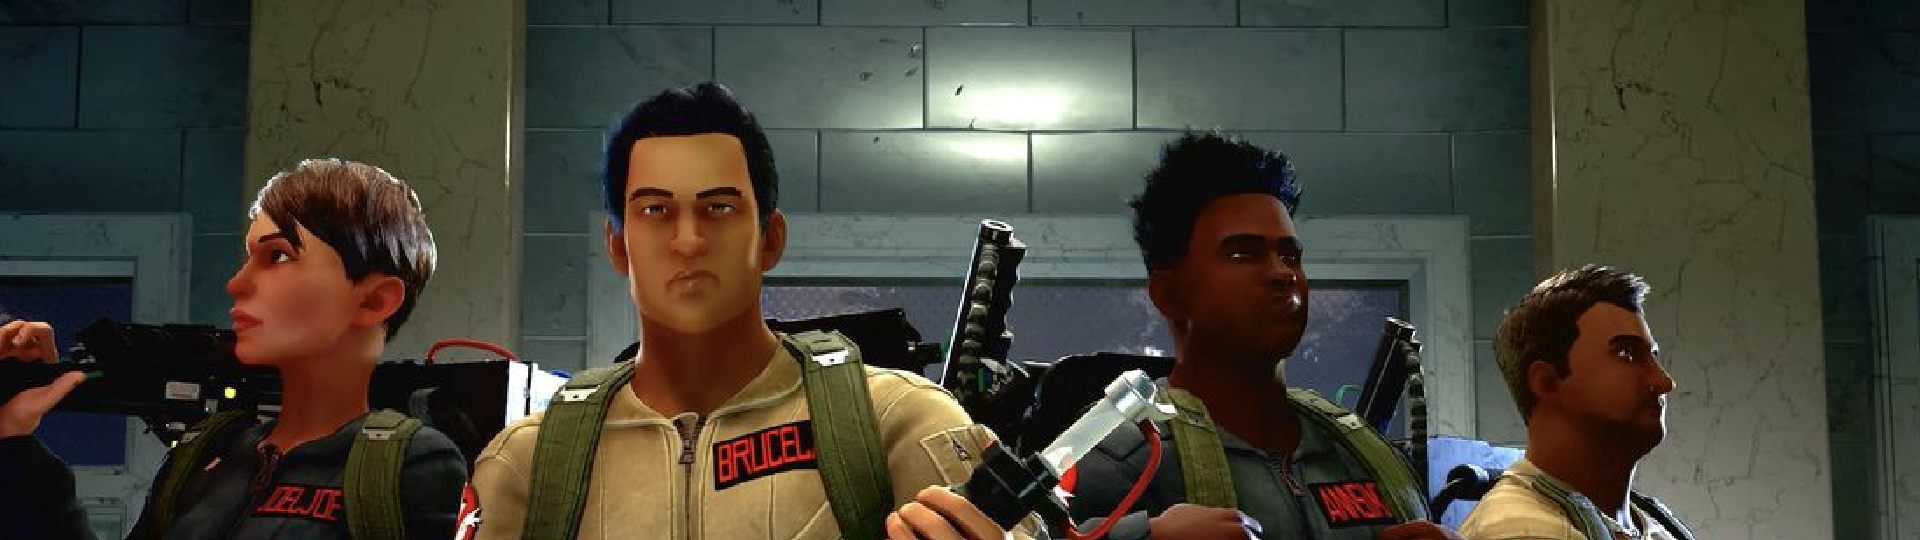 Asymetrický multiplayer v Ghostbusters vás nechá hrát za ducha nebo ho lovit | Videa